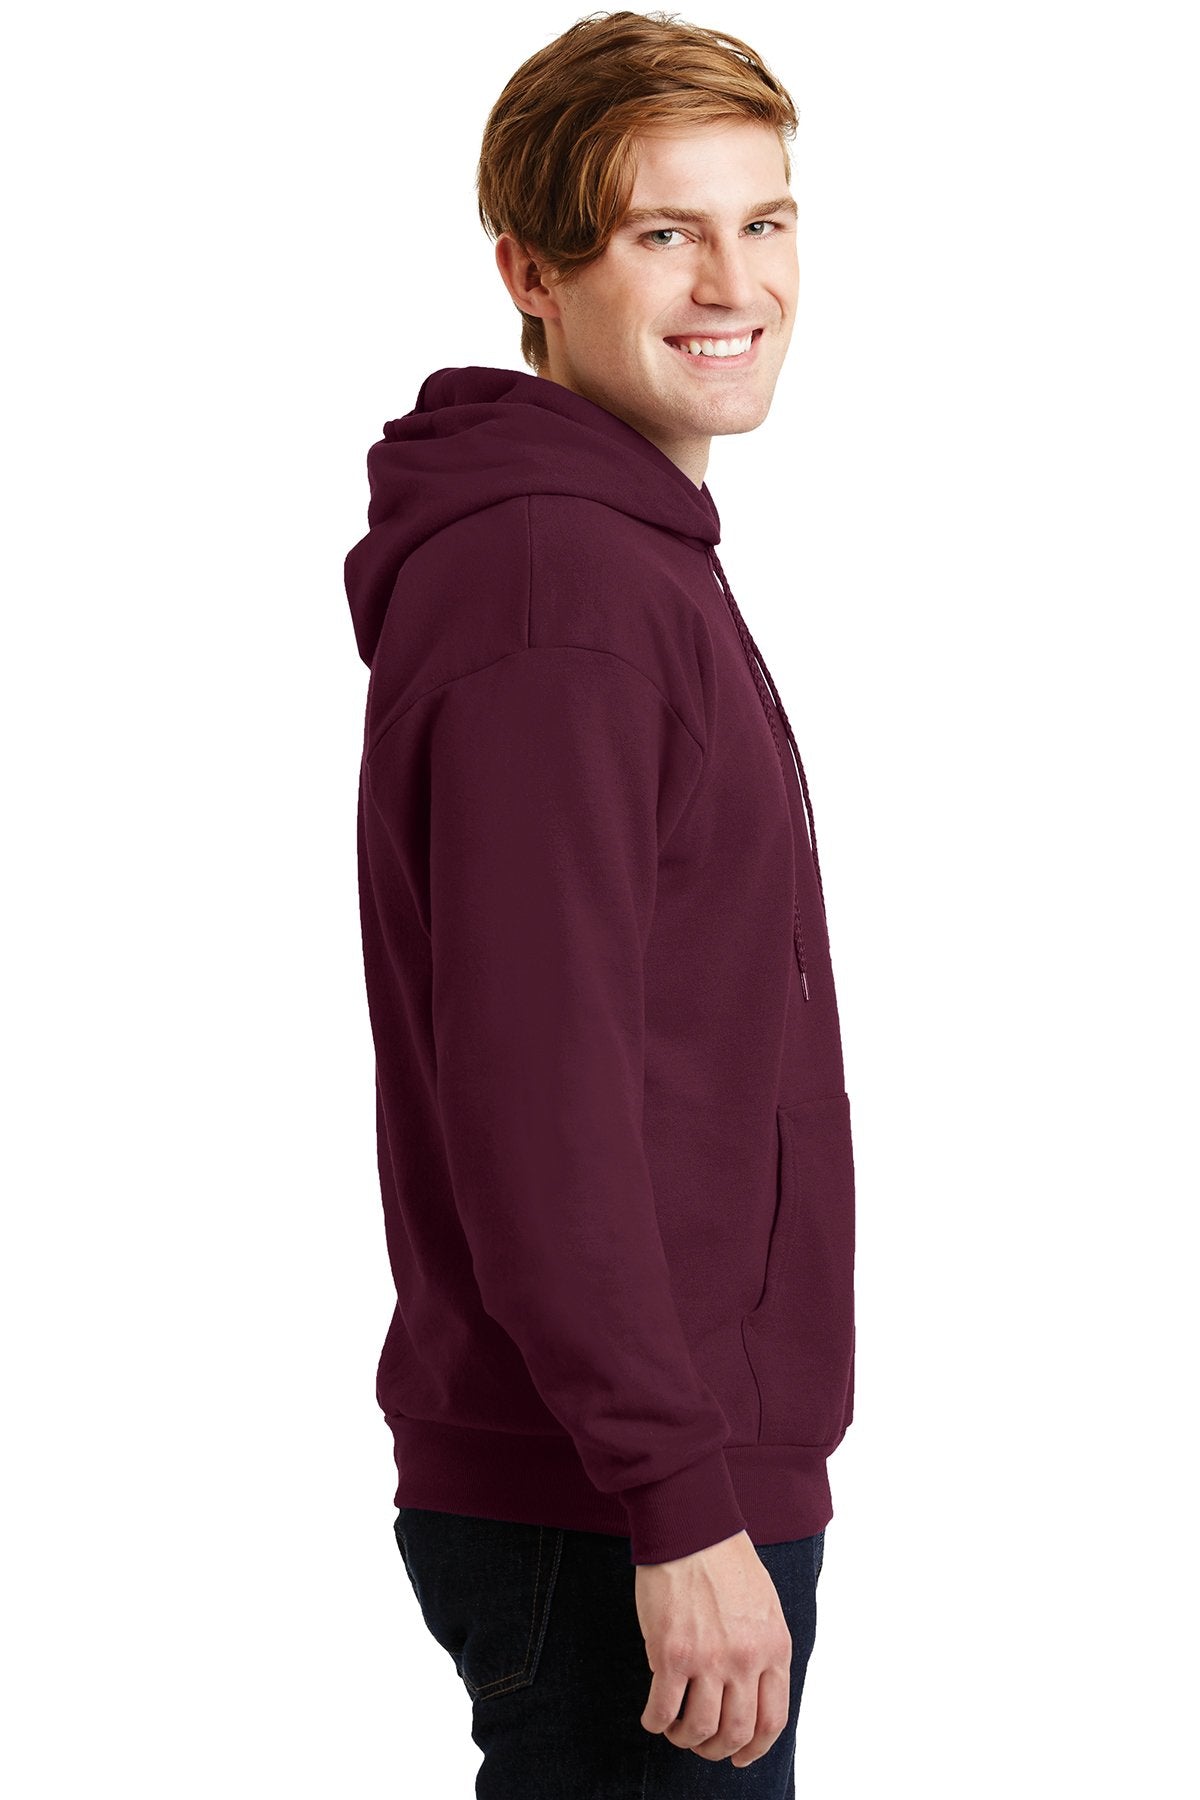 Hanes Ecosmart Pullover Hooded Sweatshirt P170 Maroon